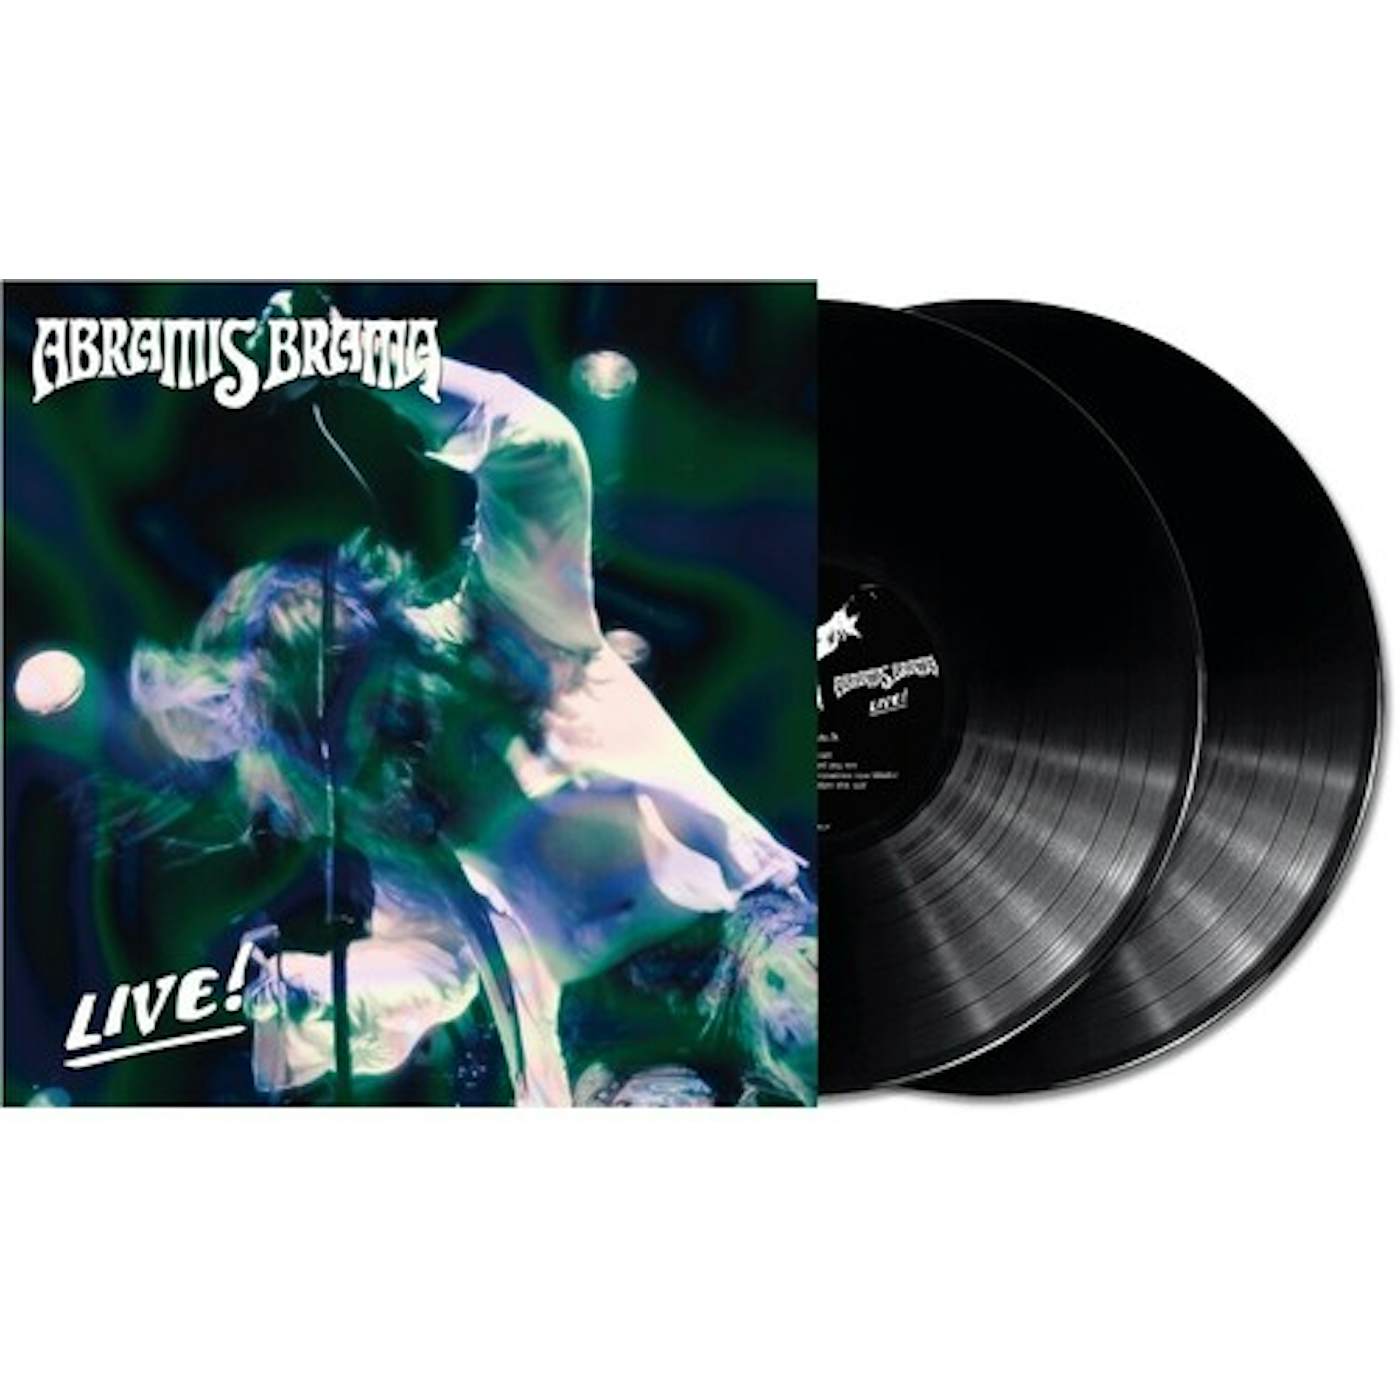 Abramis Brama LIVE Vinyl Record